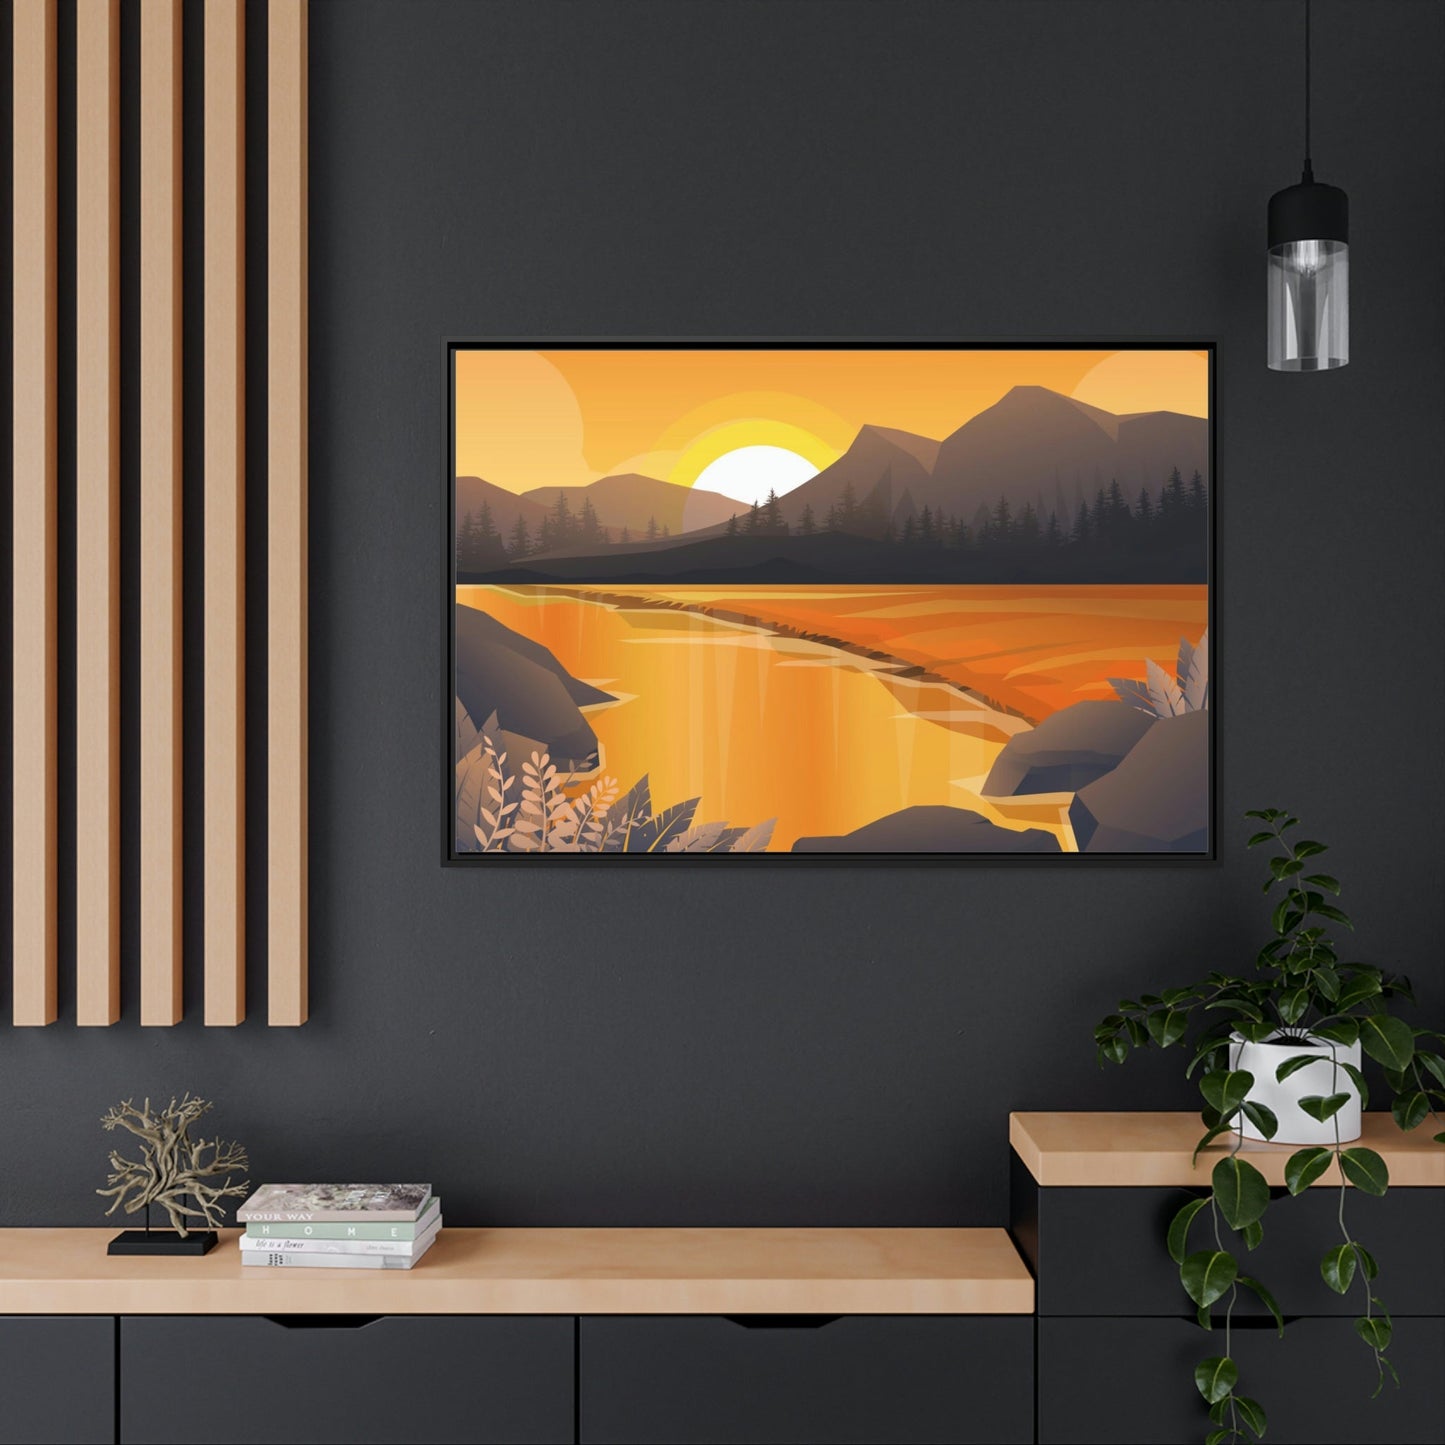 Riverfront Escape: Print on Canvas of a Serene River Landscape